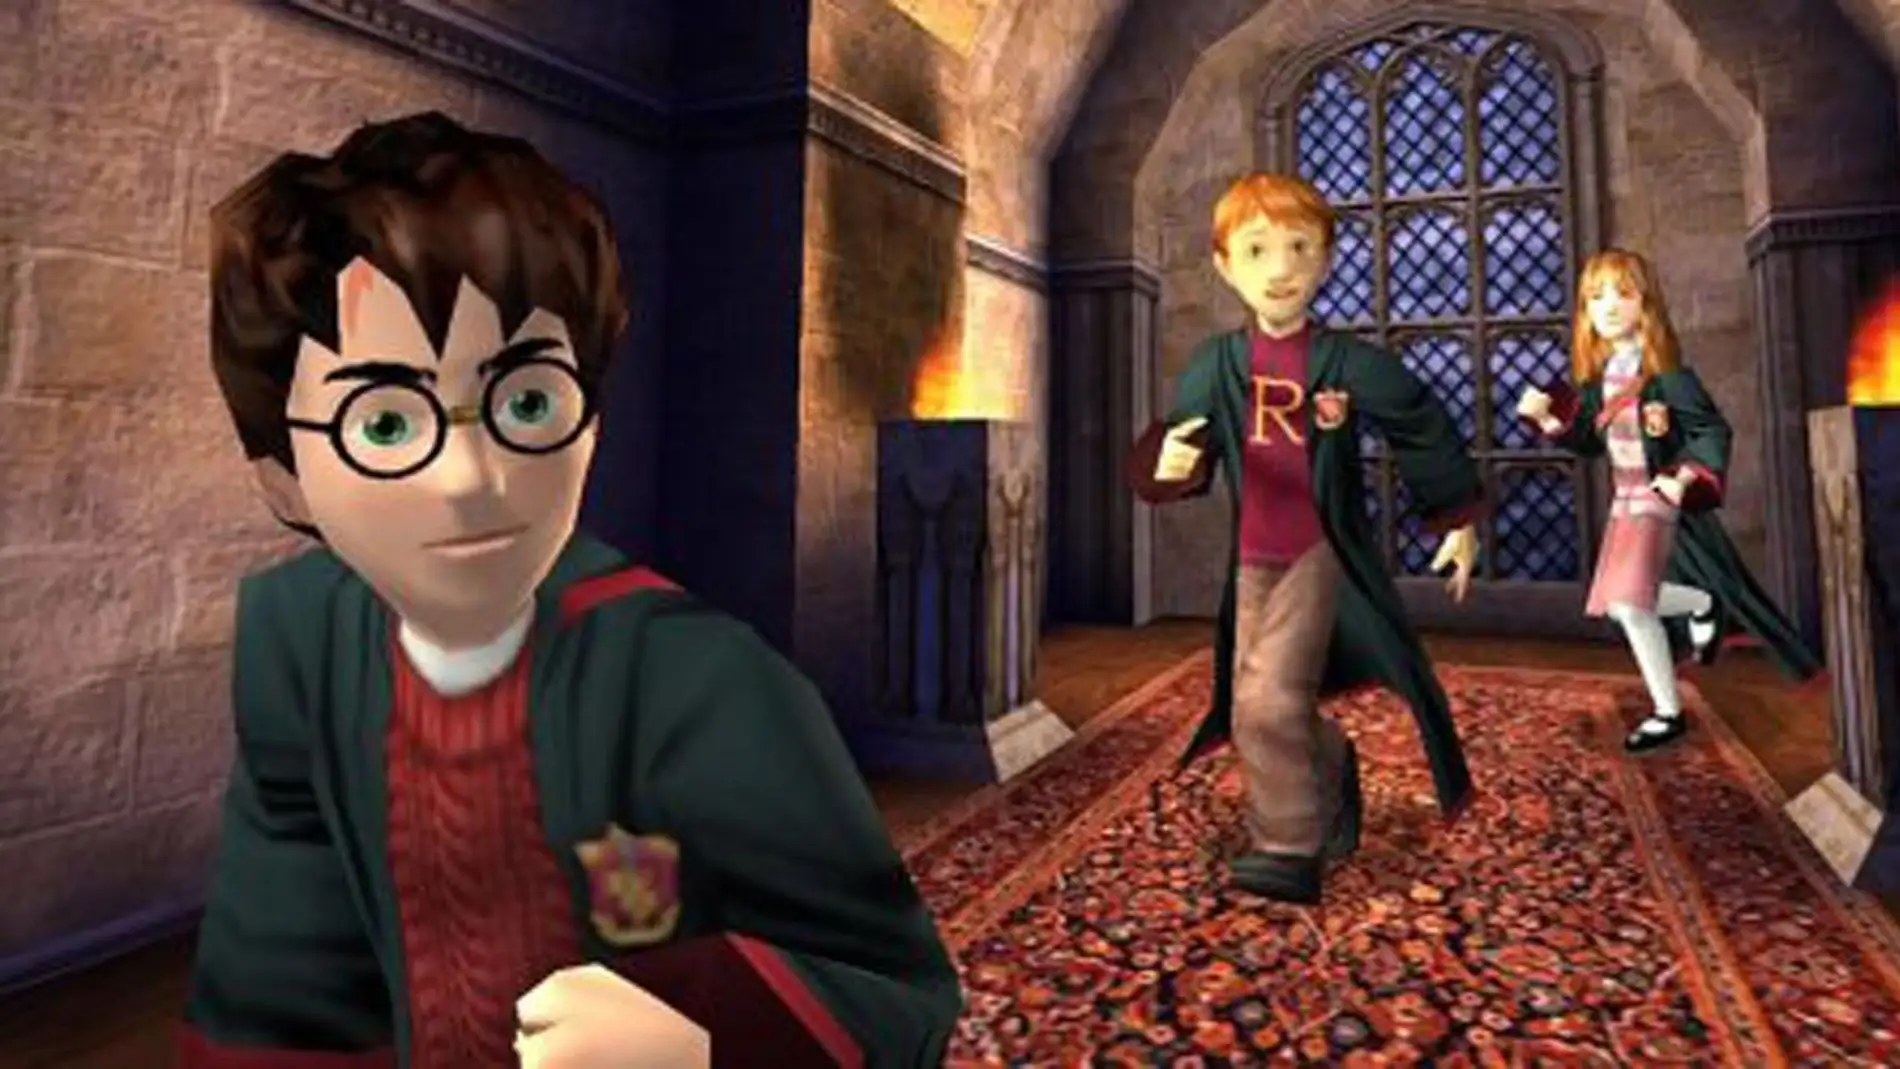 Harry Potter y la cámara secreta (videojuego), Harry Potter Wiki